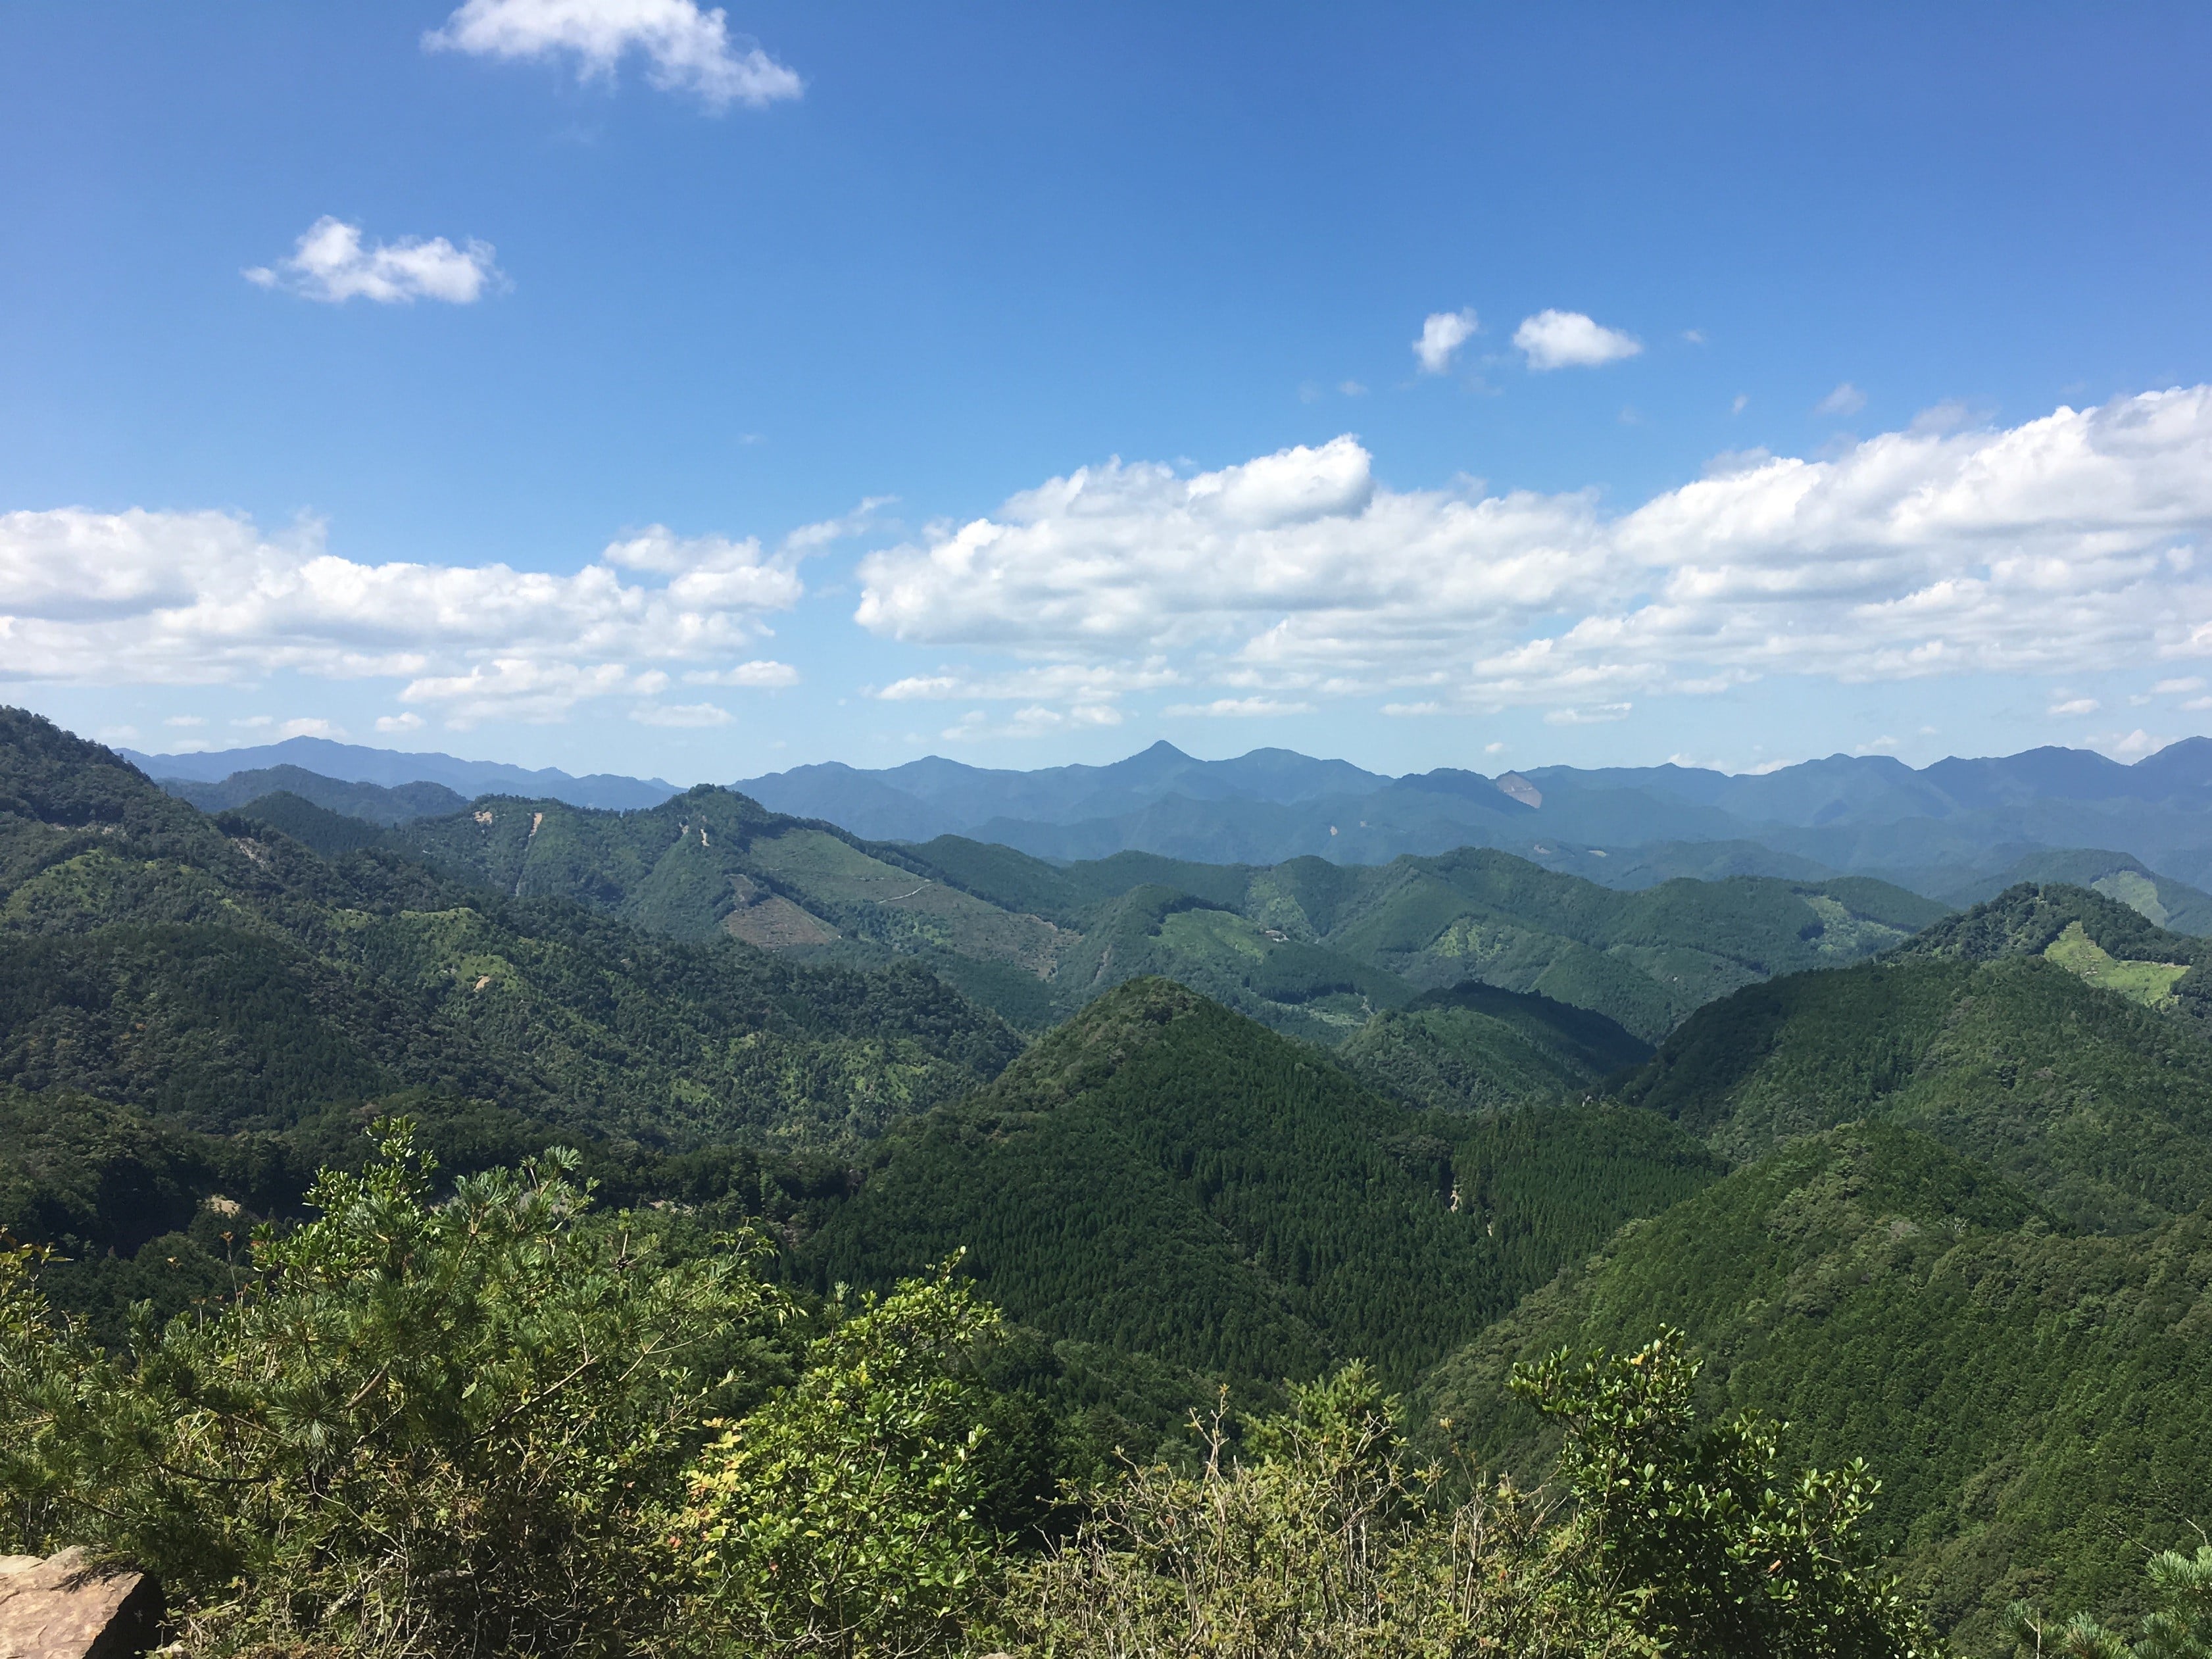 Views from Hyakken-gura of the endless Kumano mountains